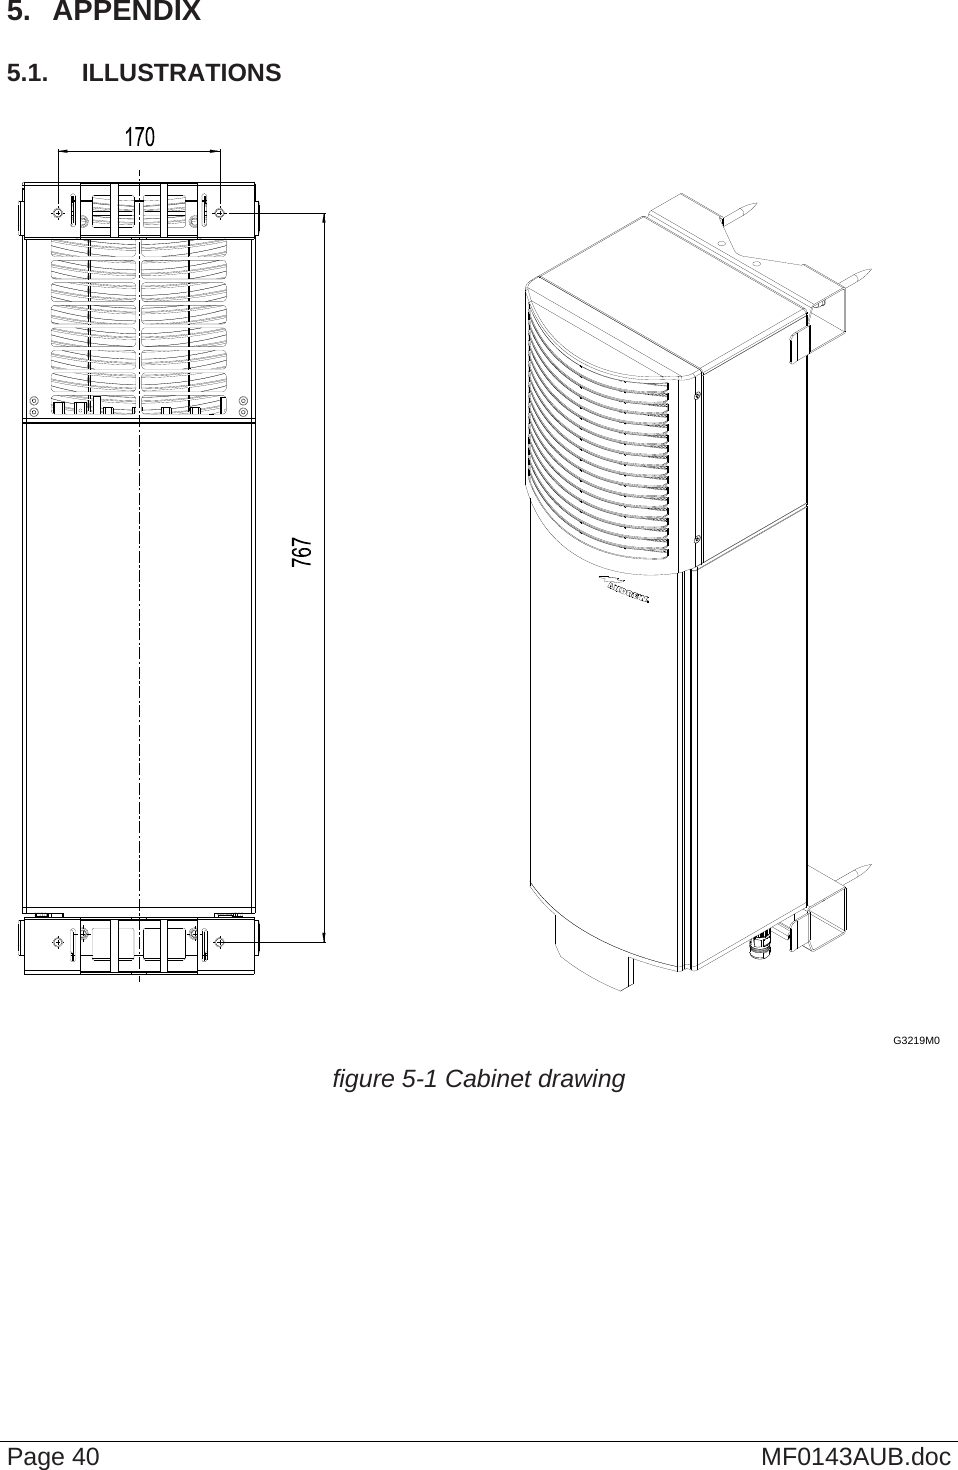  5.  APPENDIX 5.1.  ILLUSTRATIONS  G3219M0  figure 5-1 Cabinet drawing    Page 40  MF0143AUB.doc 